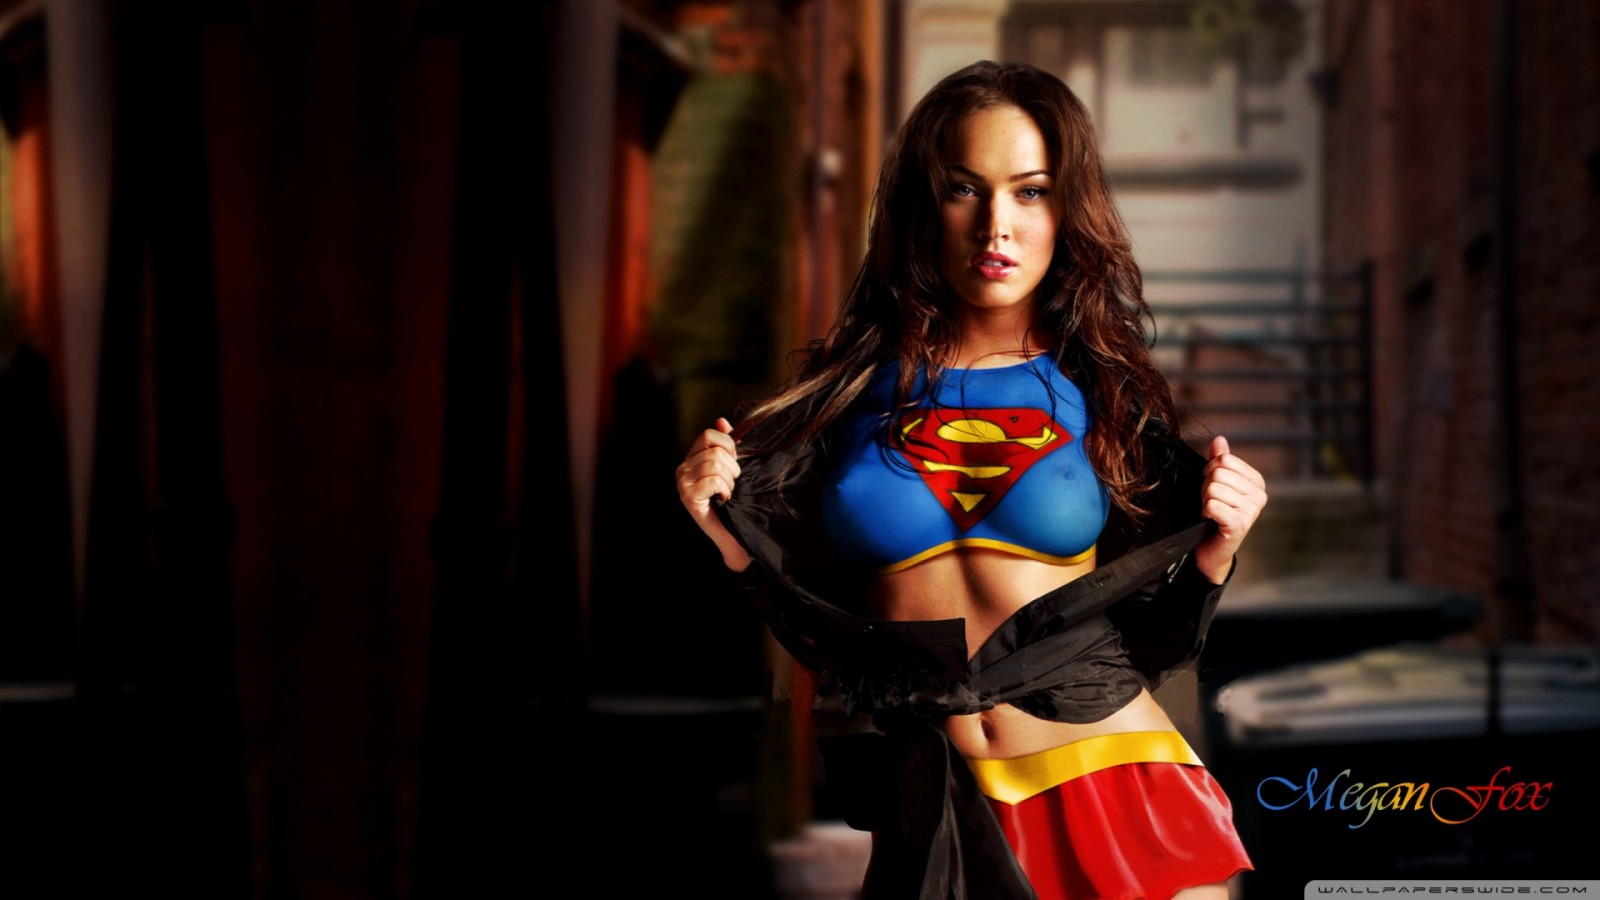 Free Download Megan Fox Superman HD Wallpaper Of Celebrities Hdwallpaper X For